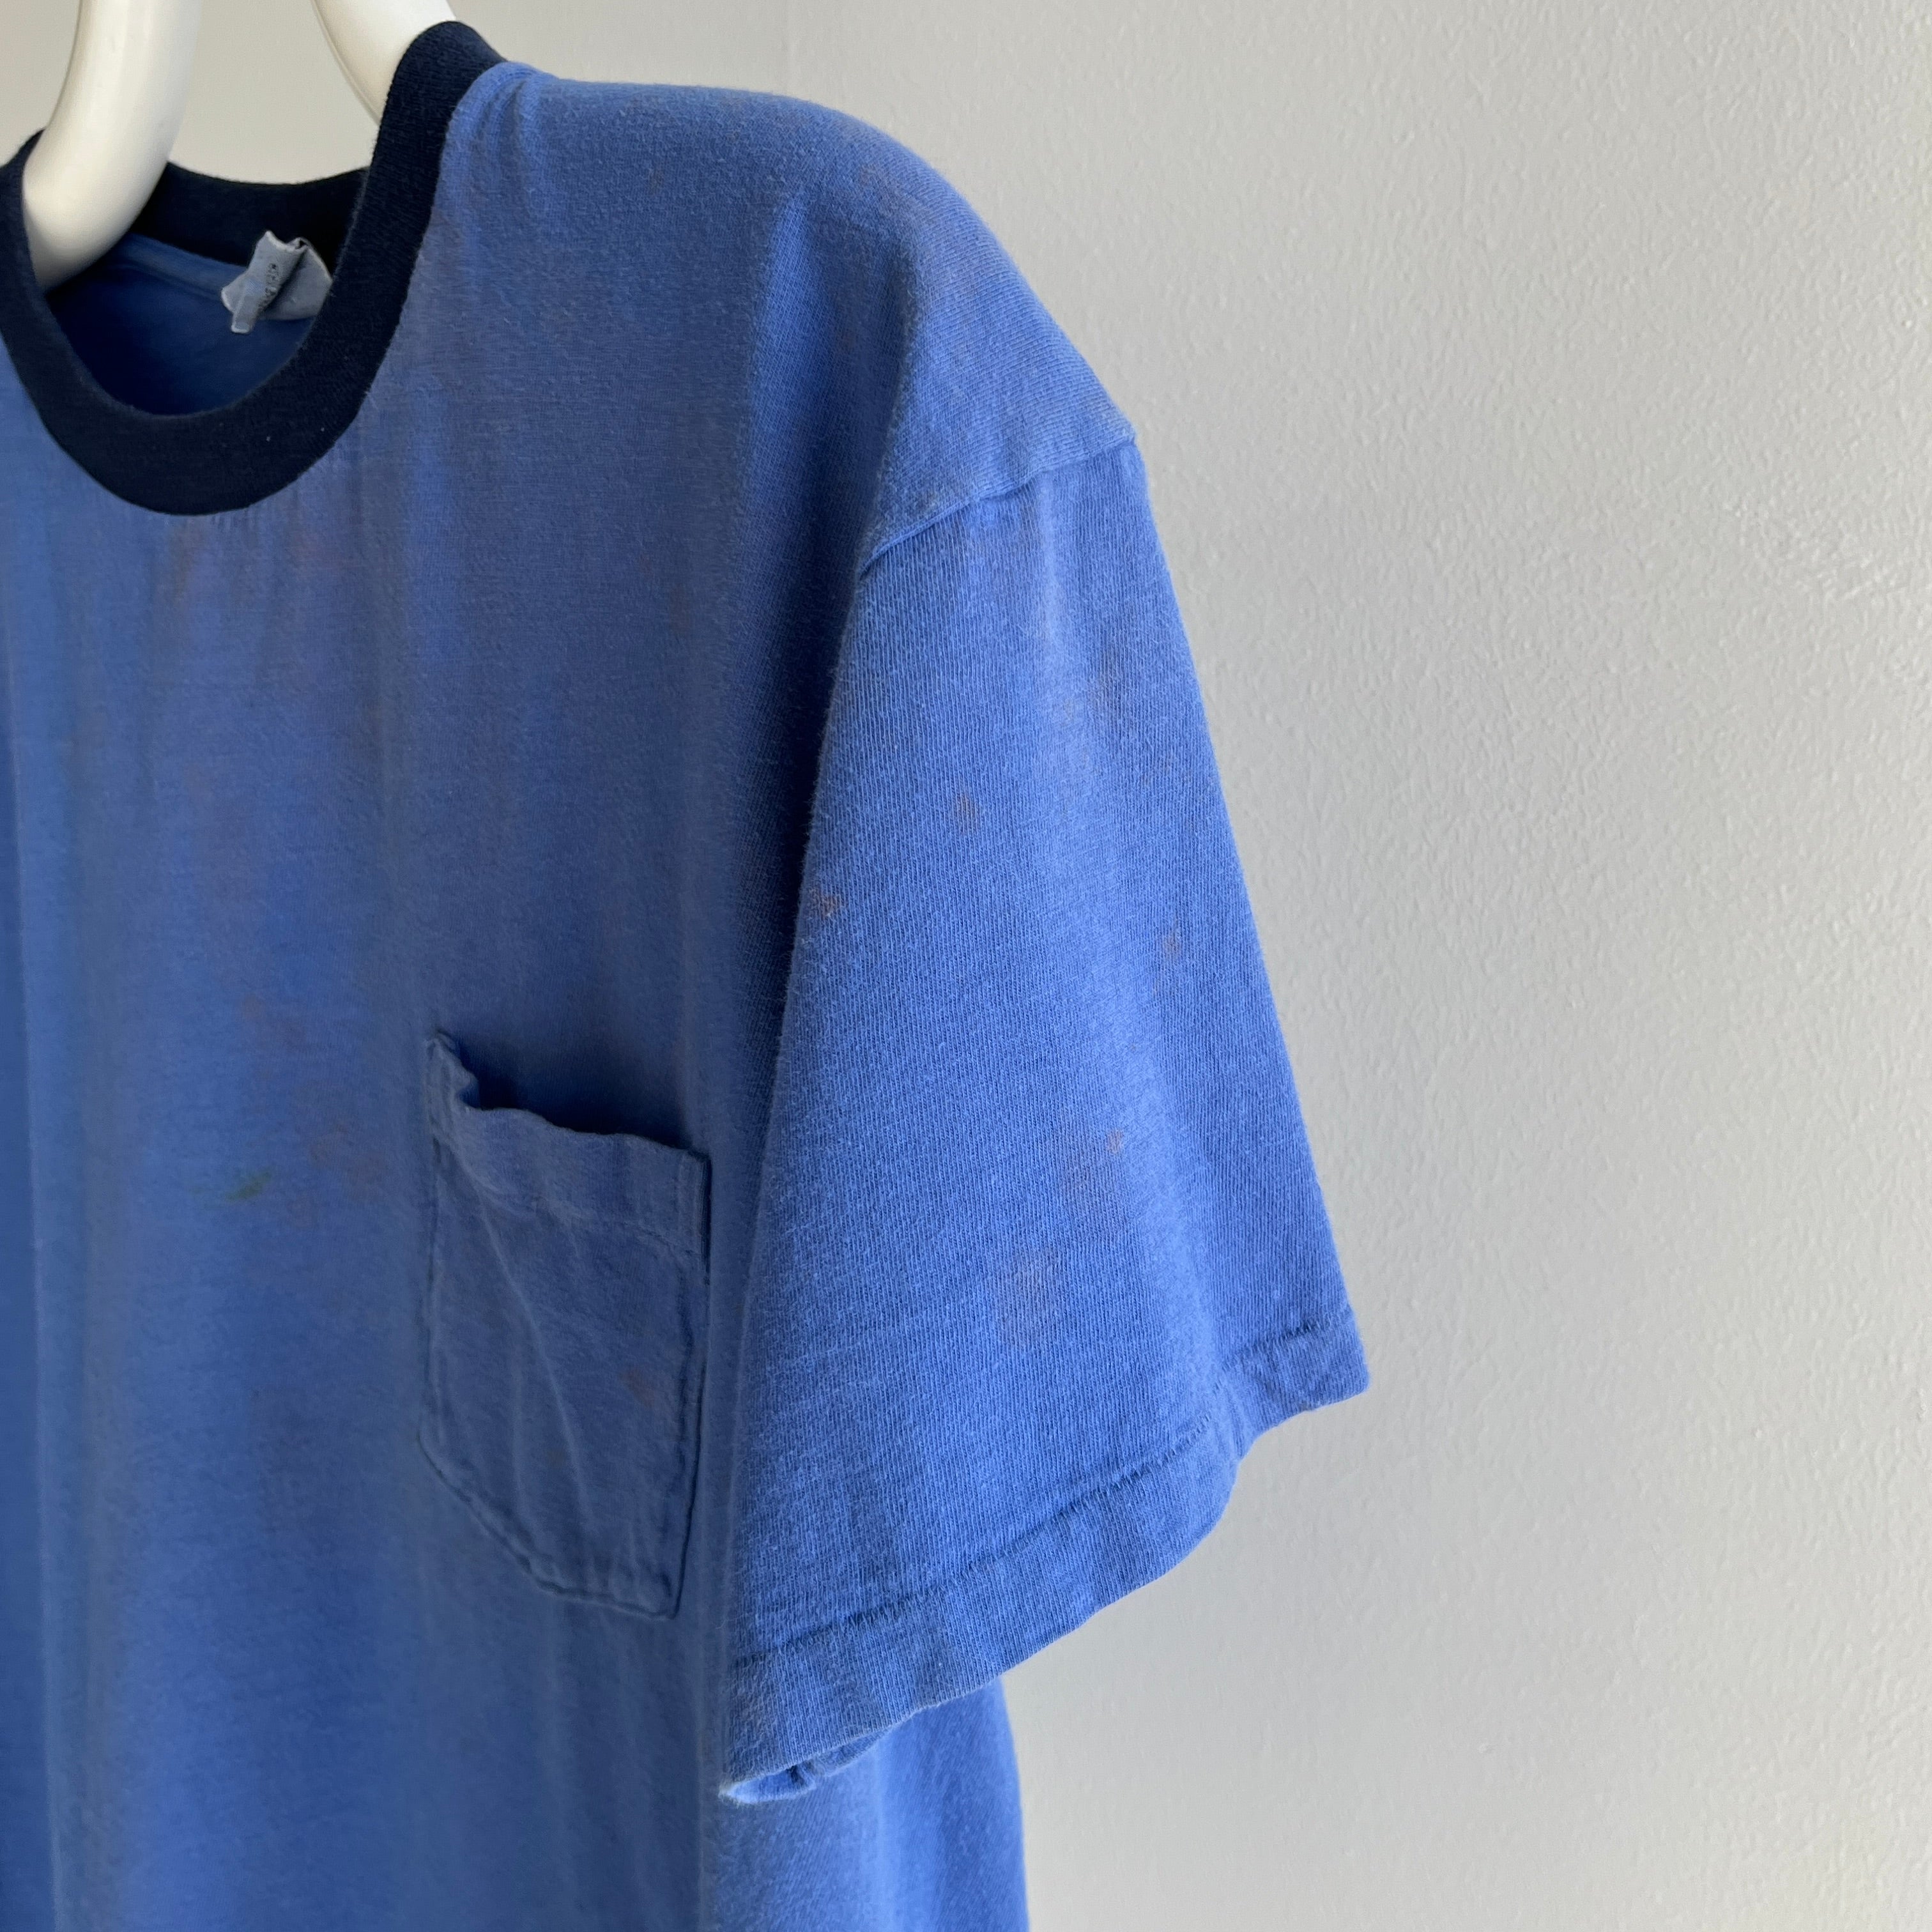 1990s USA Made Gap Cotton Pocket T-Shirt